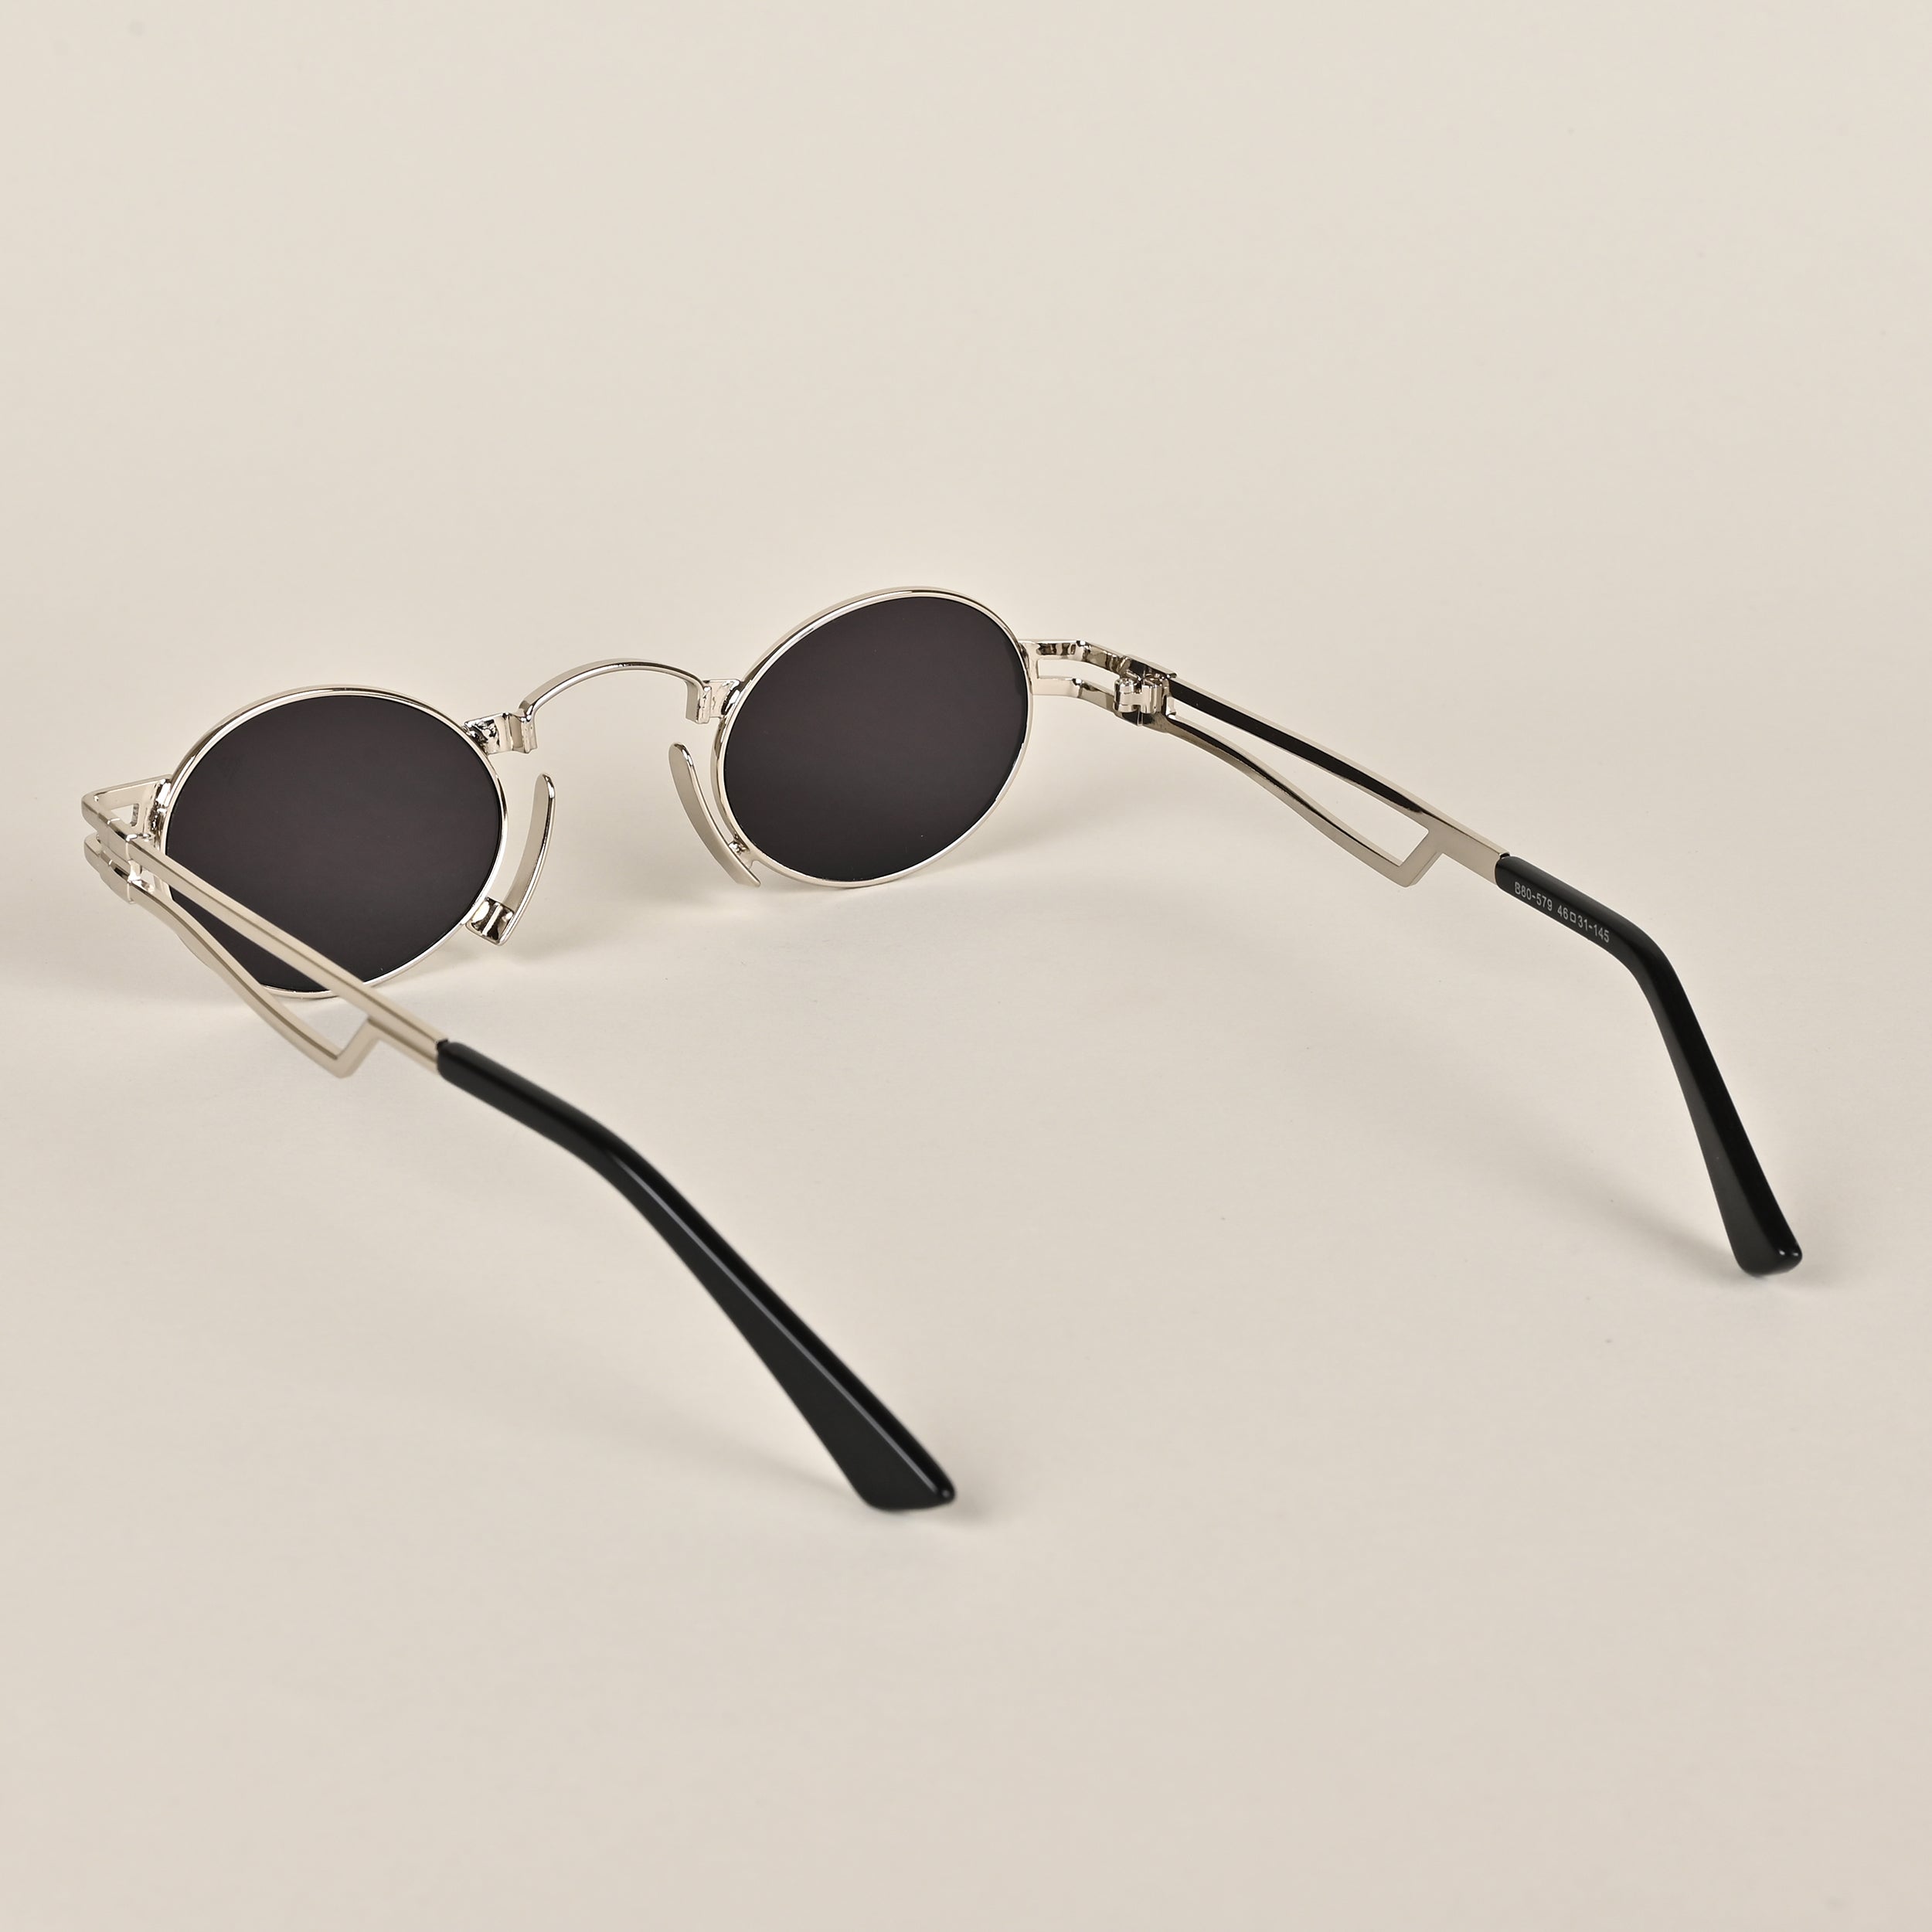 Voyage Silver Black Round Sunglasses MG3585